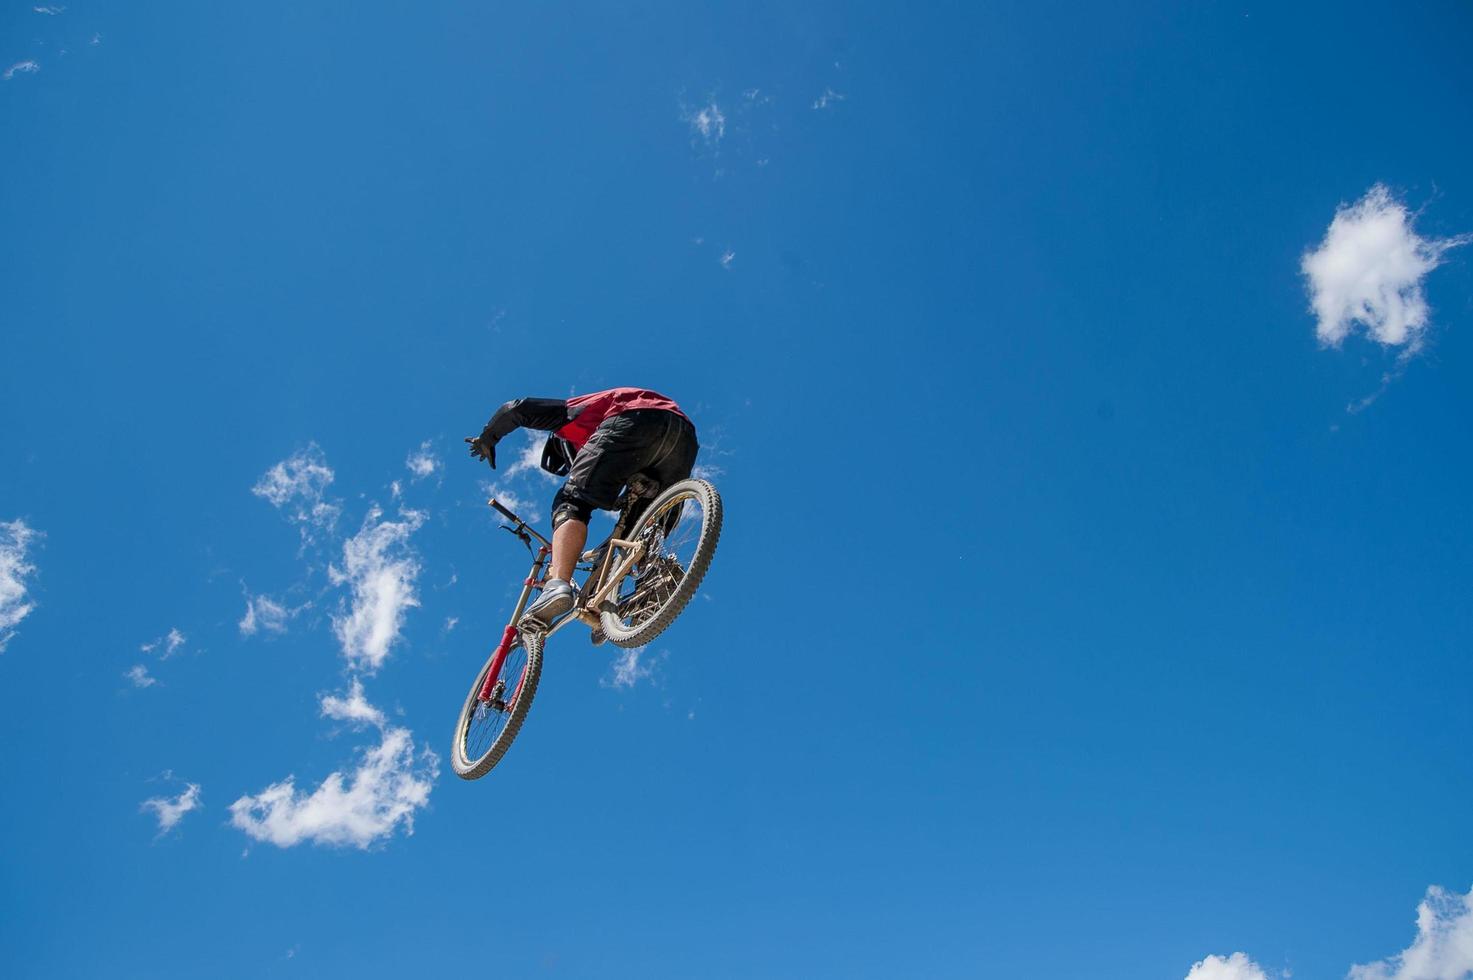 Liivigno Italie 2014 garçon qui termine la descente en vélo avec un saut photo